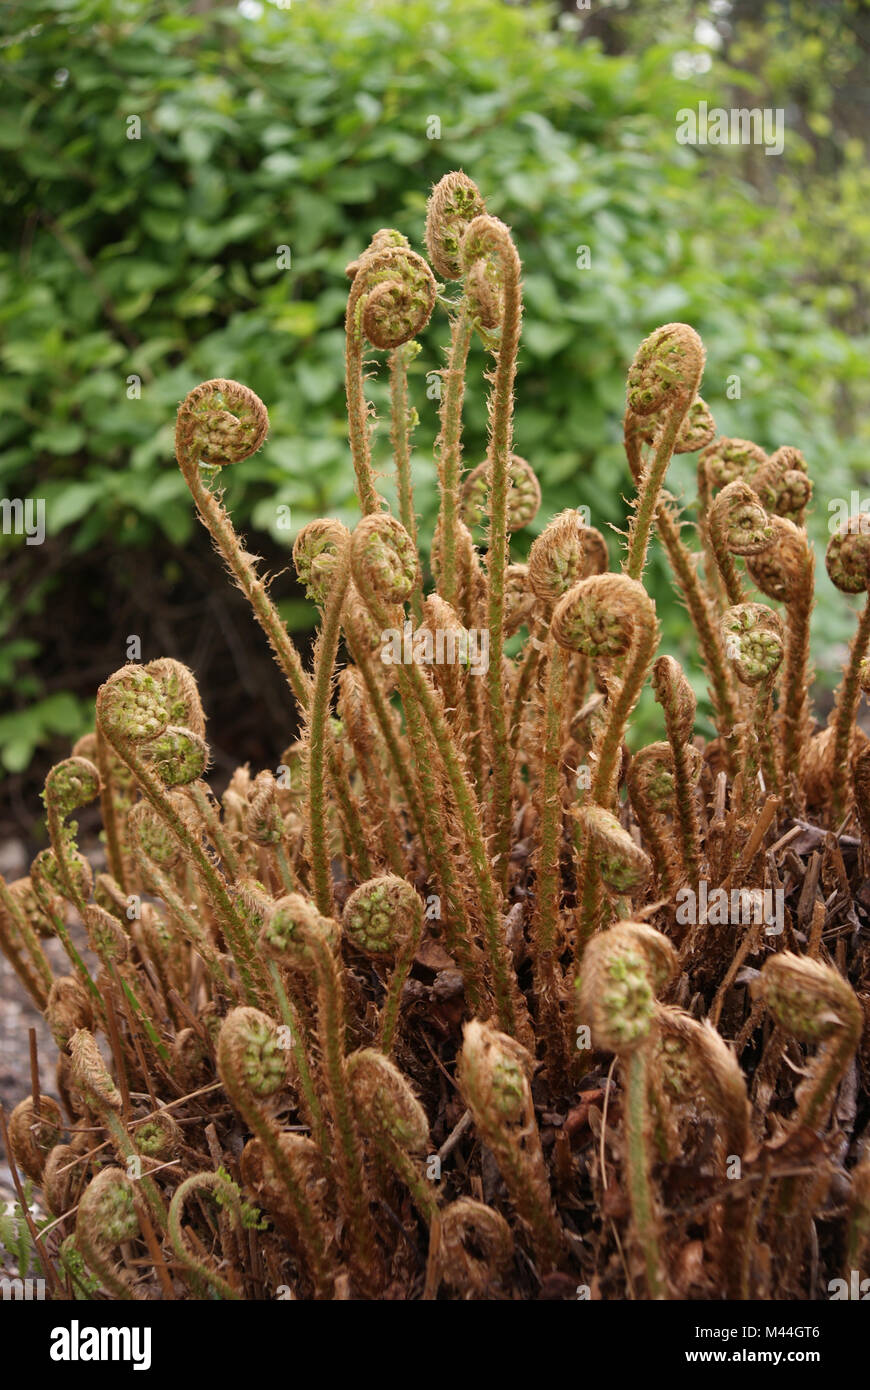 Dryopteris affinis, Goldschuppenfarn, scaly male fern Stock Photo